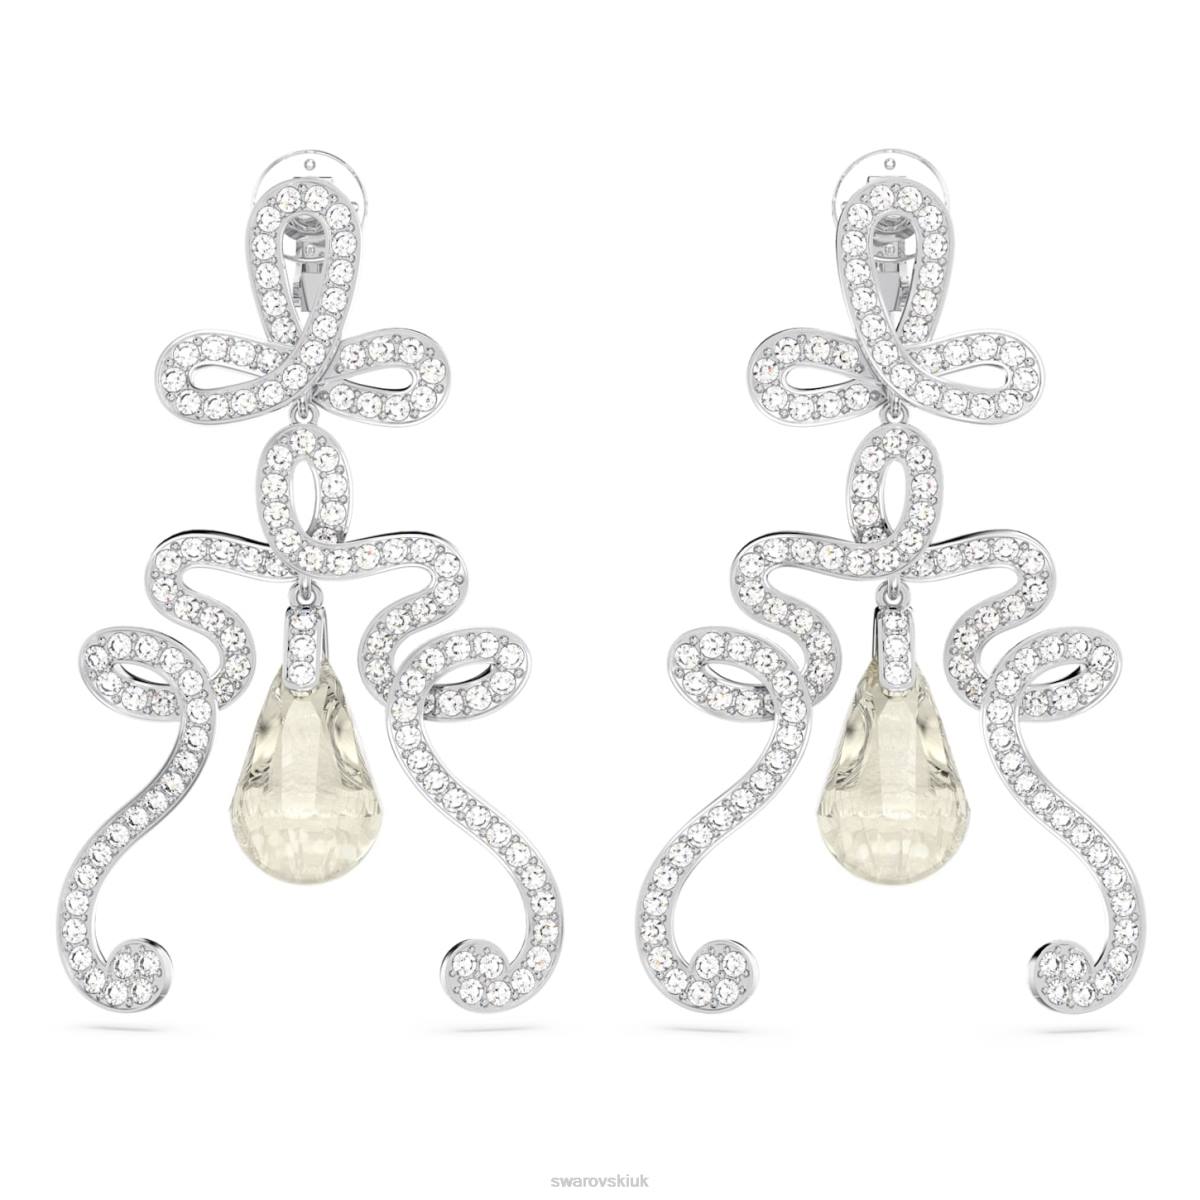 Jewelry Swarovski Fluenta clip earrings Reignited crystals, White, Rhodium plated 48JX956